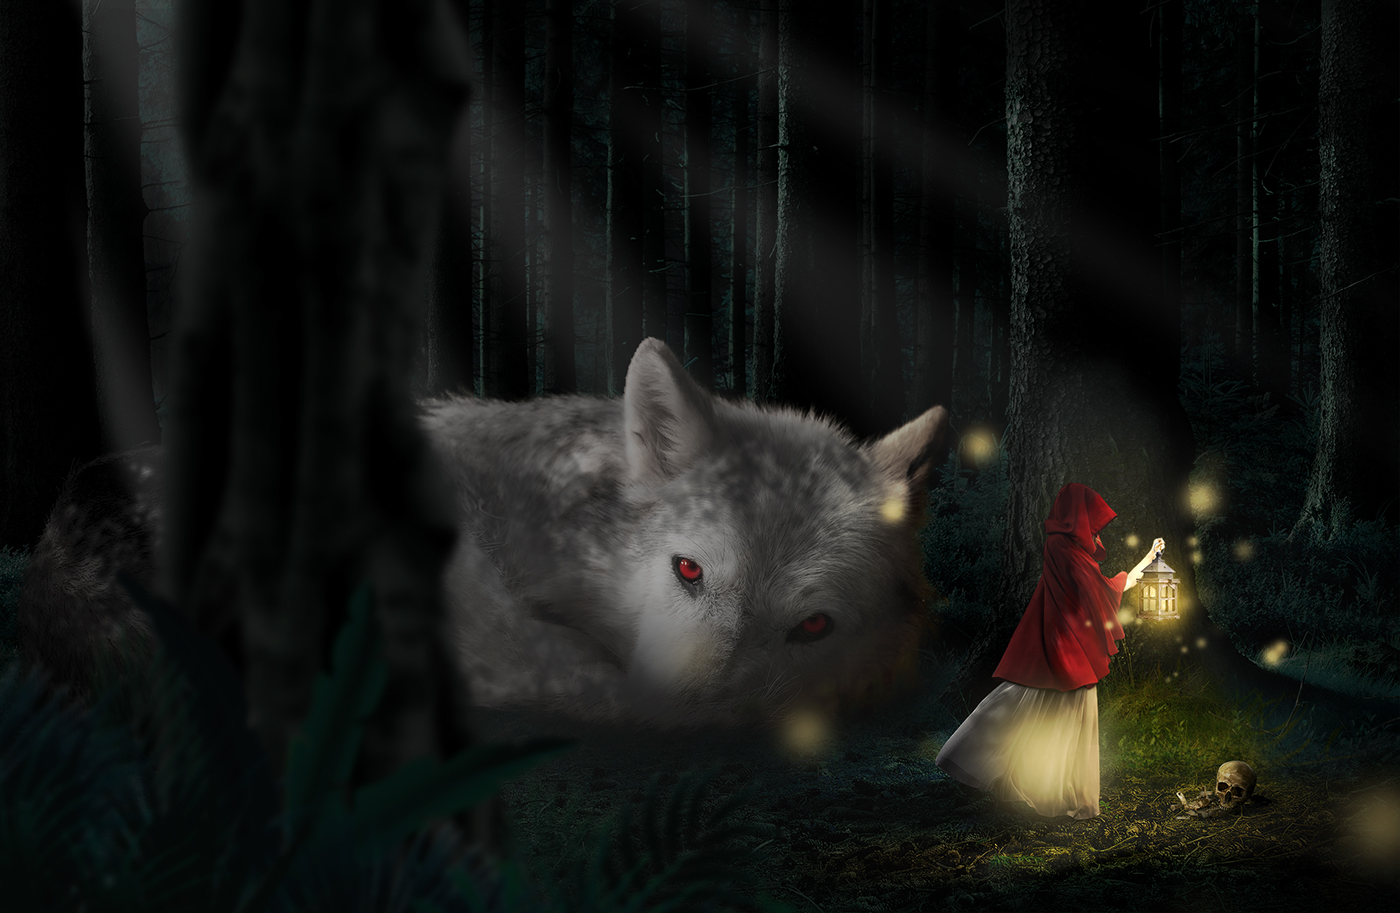 red hood wolf night forest lantern imagemanipulation composition lighting photoshop